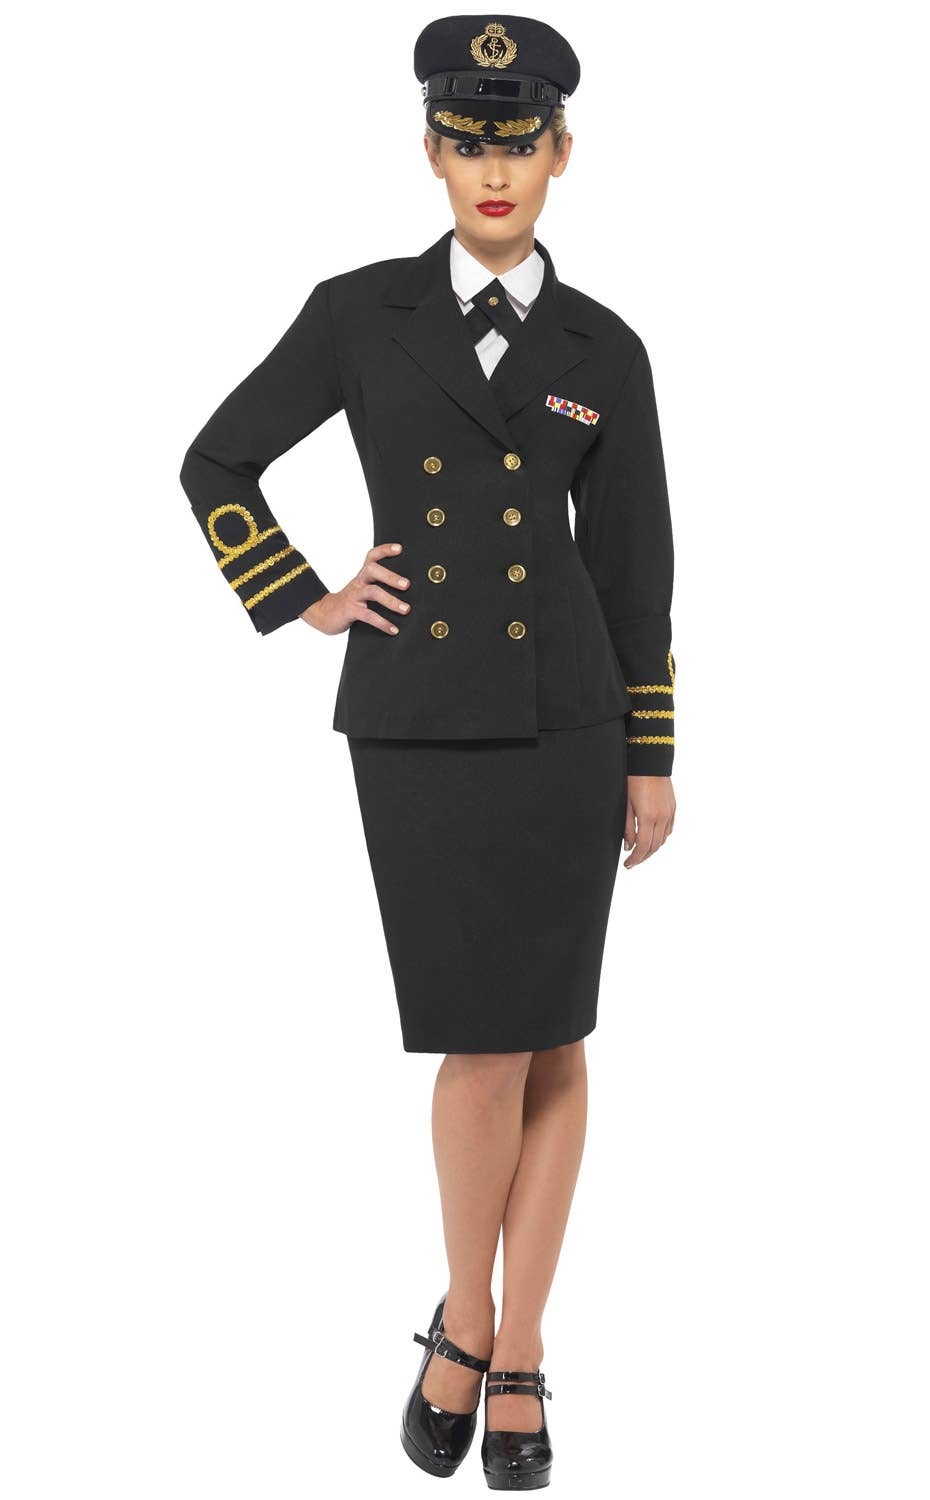 Black Women's Navy Officer Fancy Dress Costume  Front View